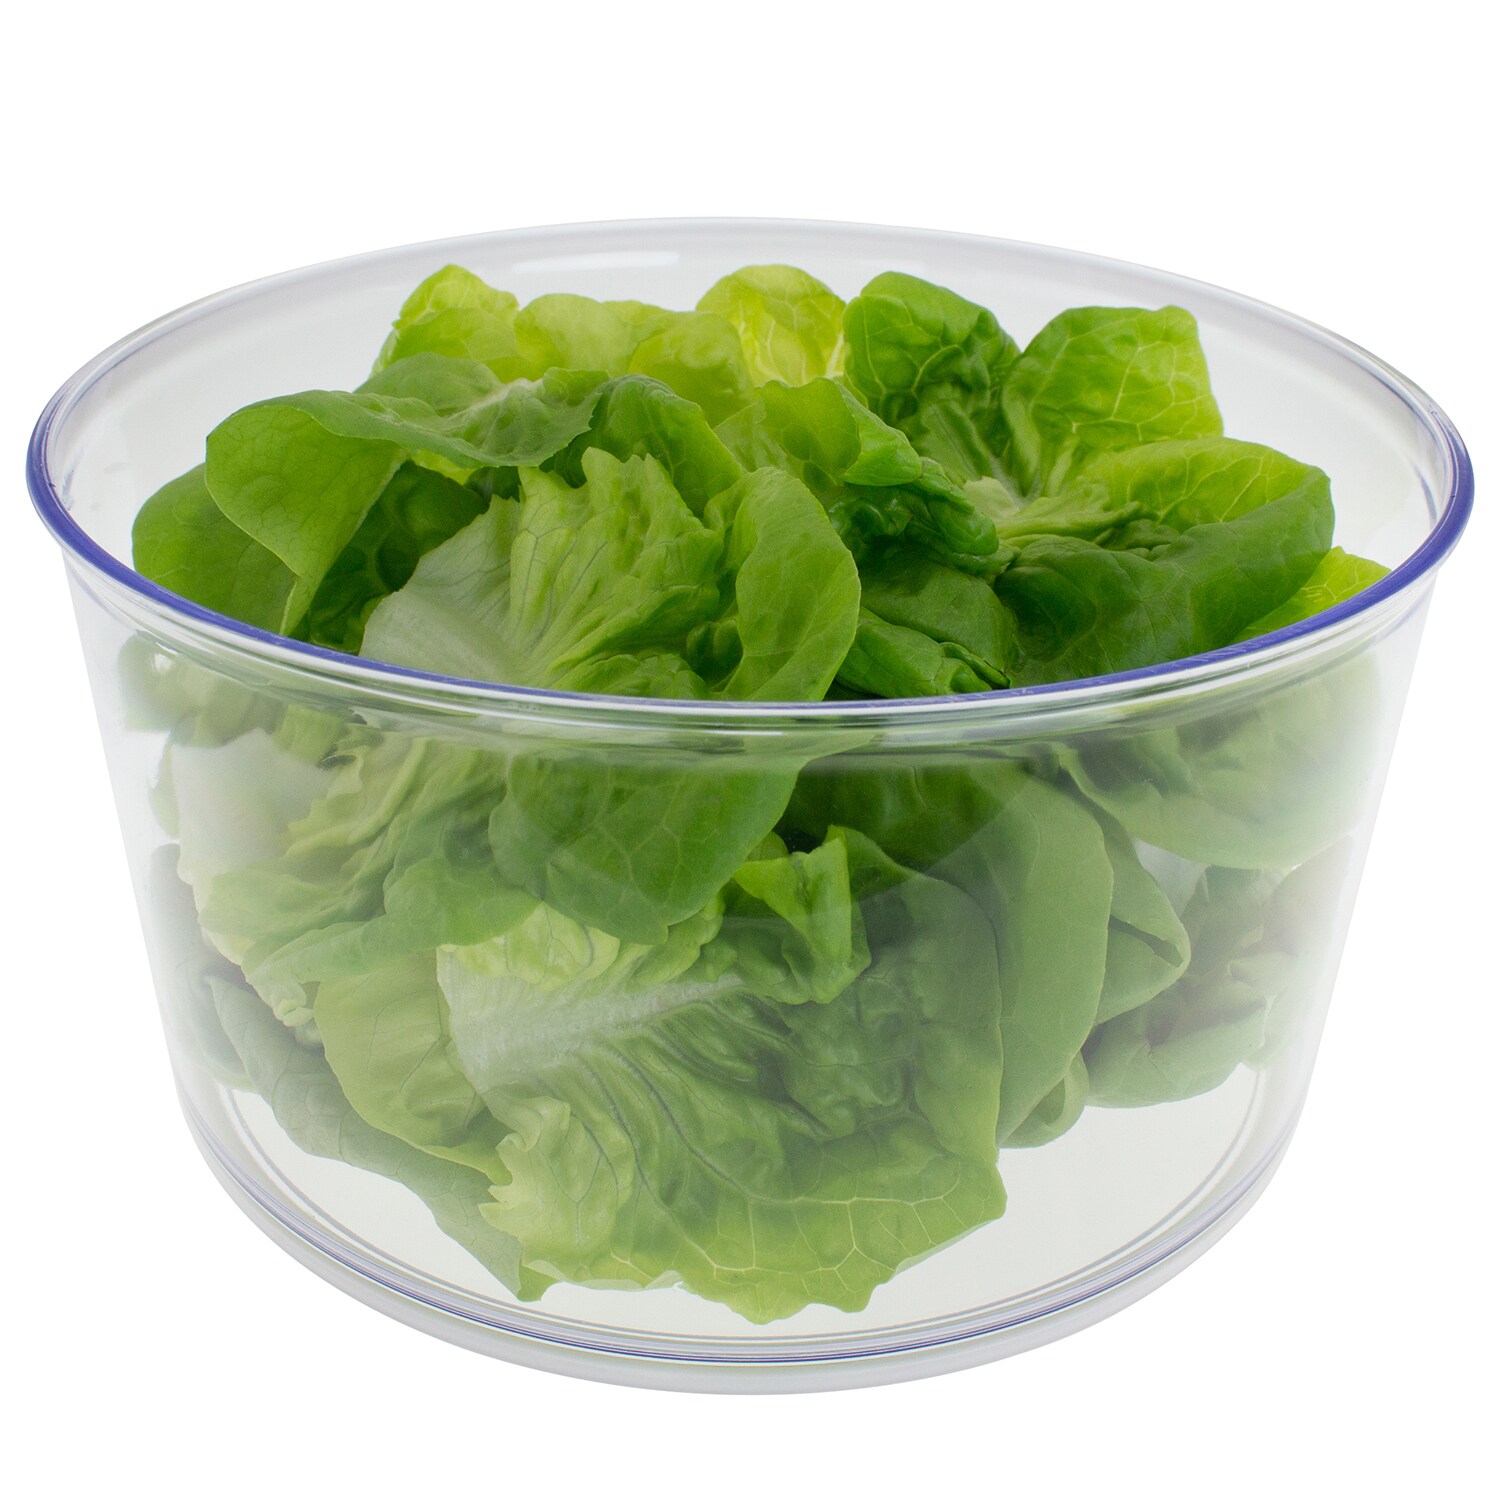 https://ak1.ostkcdn.com/images/products/10480210/Freshware-Salad-Spinner-with-Storage-Lid-eab435d4-8981-4b9f-8470-2577eff07850.jpg